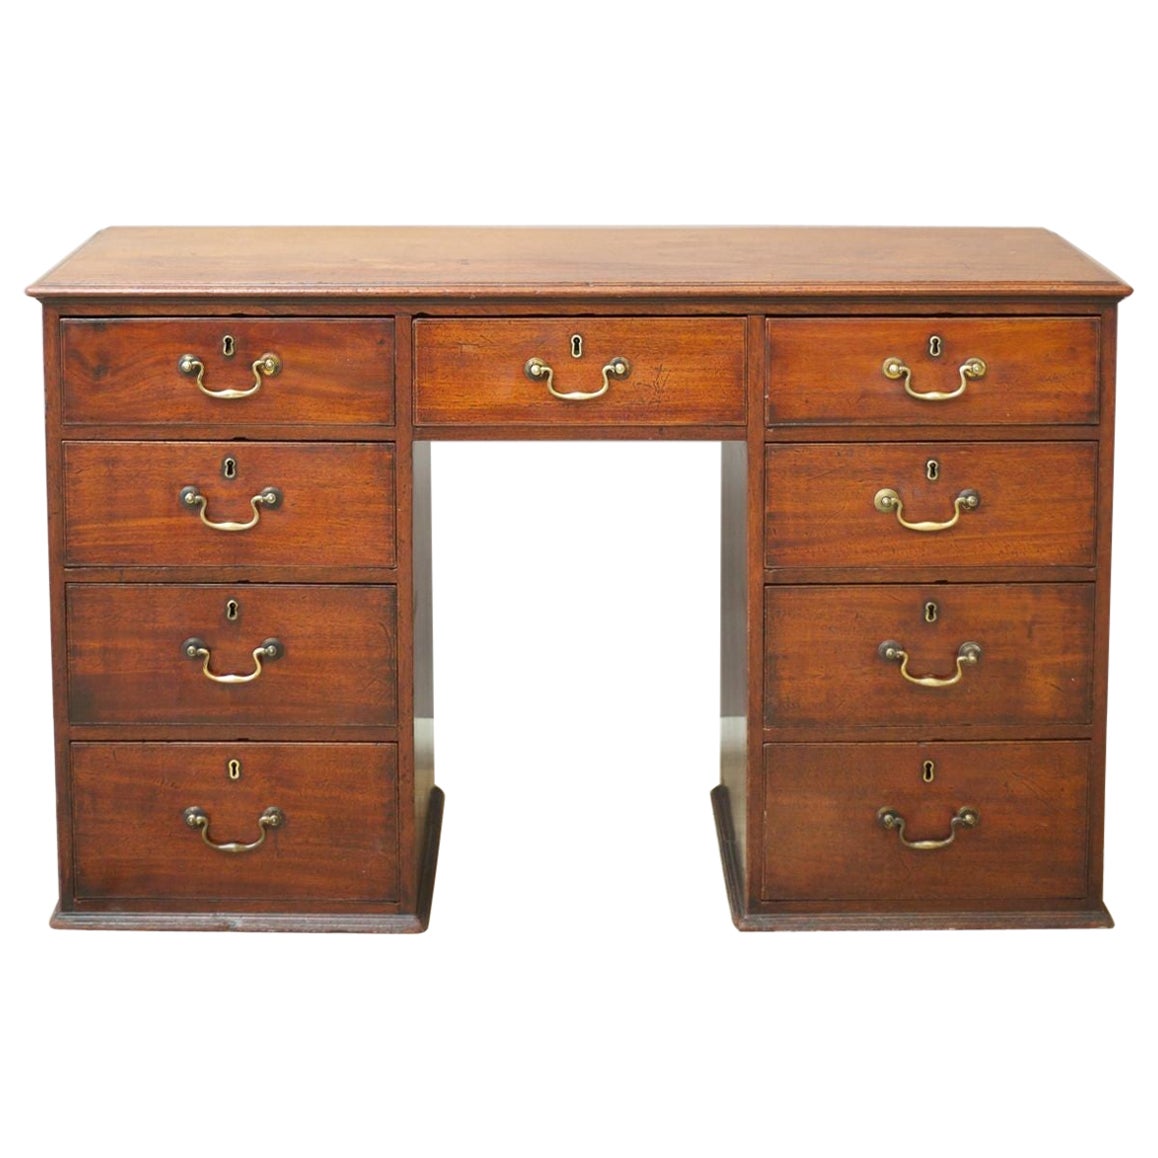 Georgian Solid Mahogany Desk For Sale